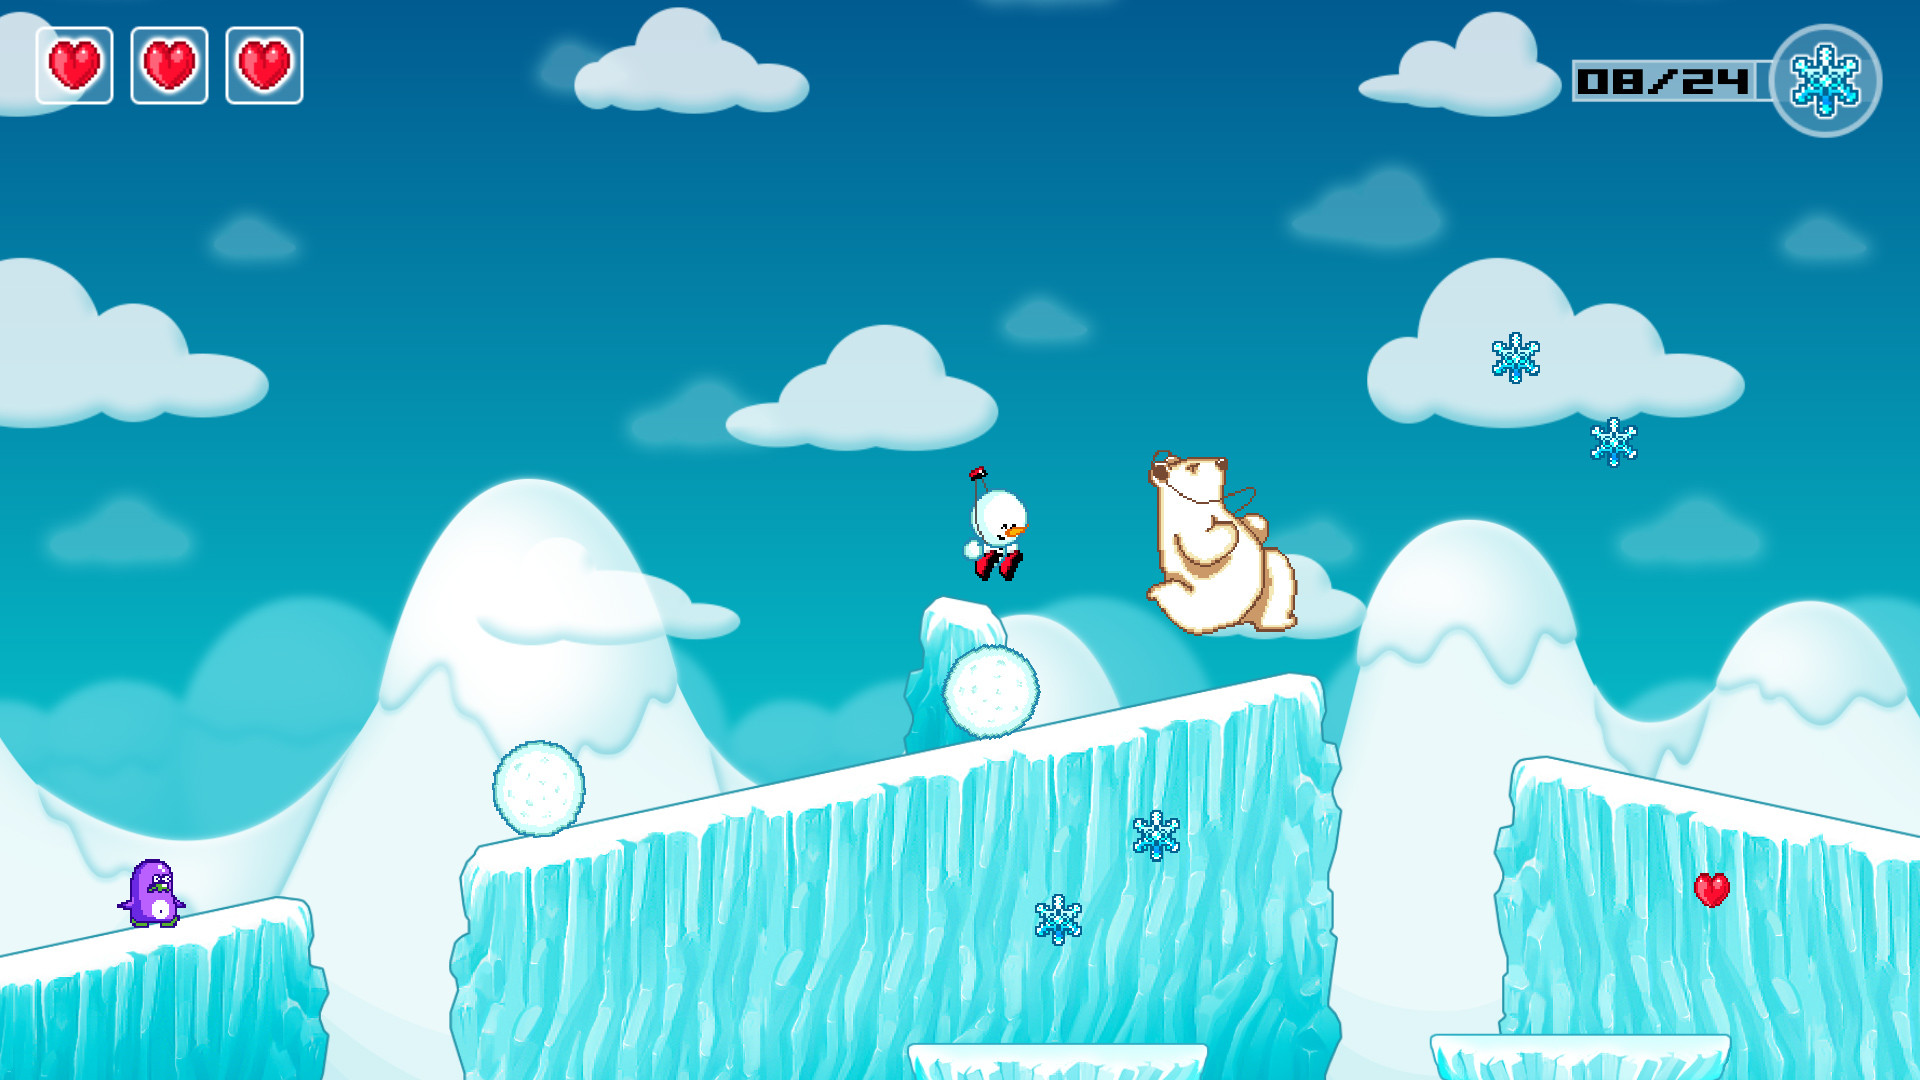 Mission in Snowdriftland - Snowlogue screenshot